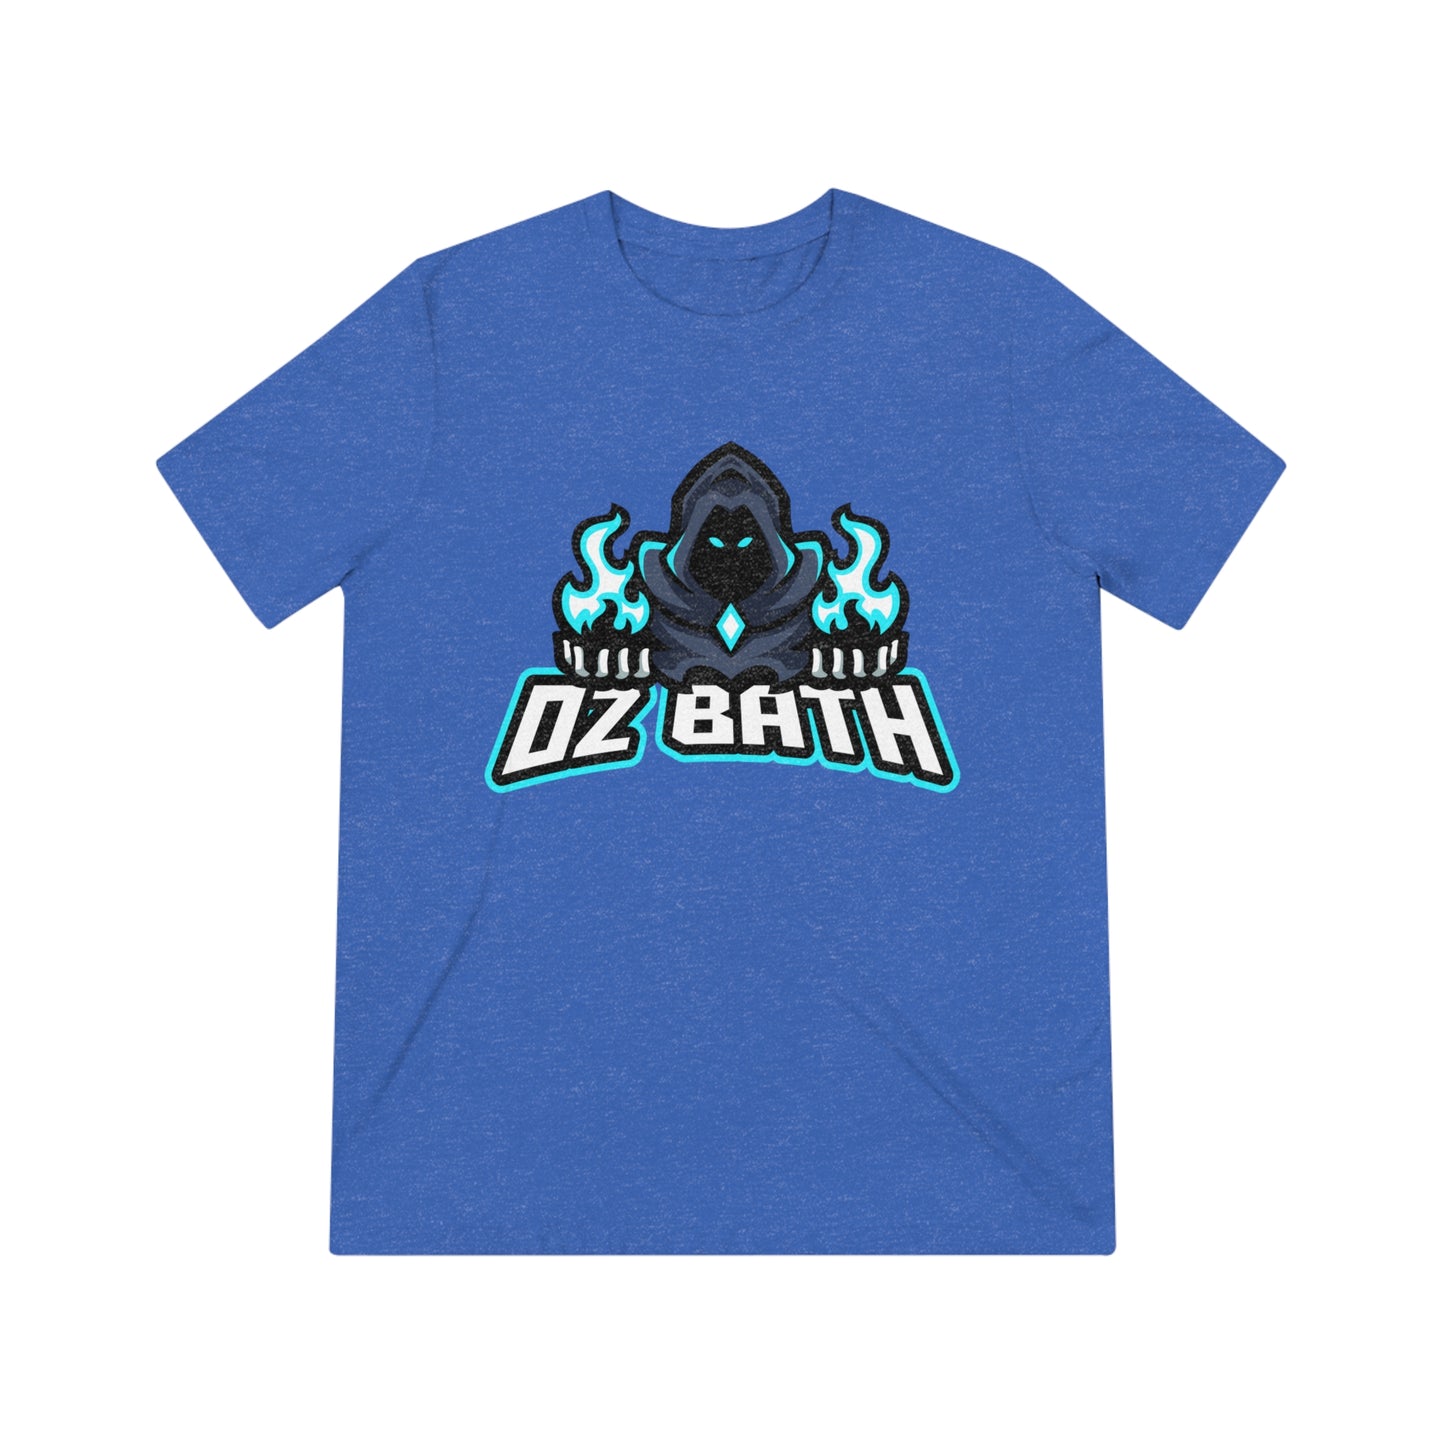 OZ Bath - T-Shirt